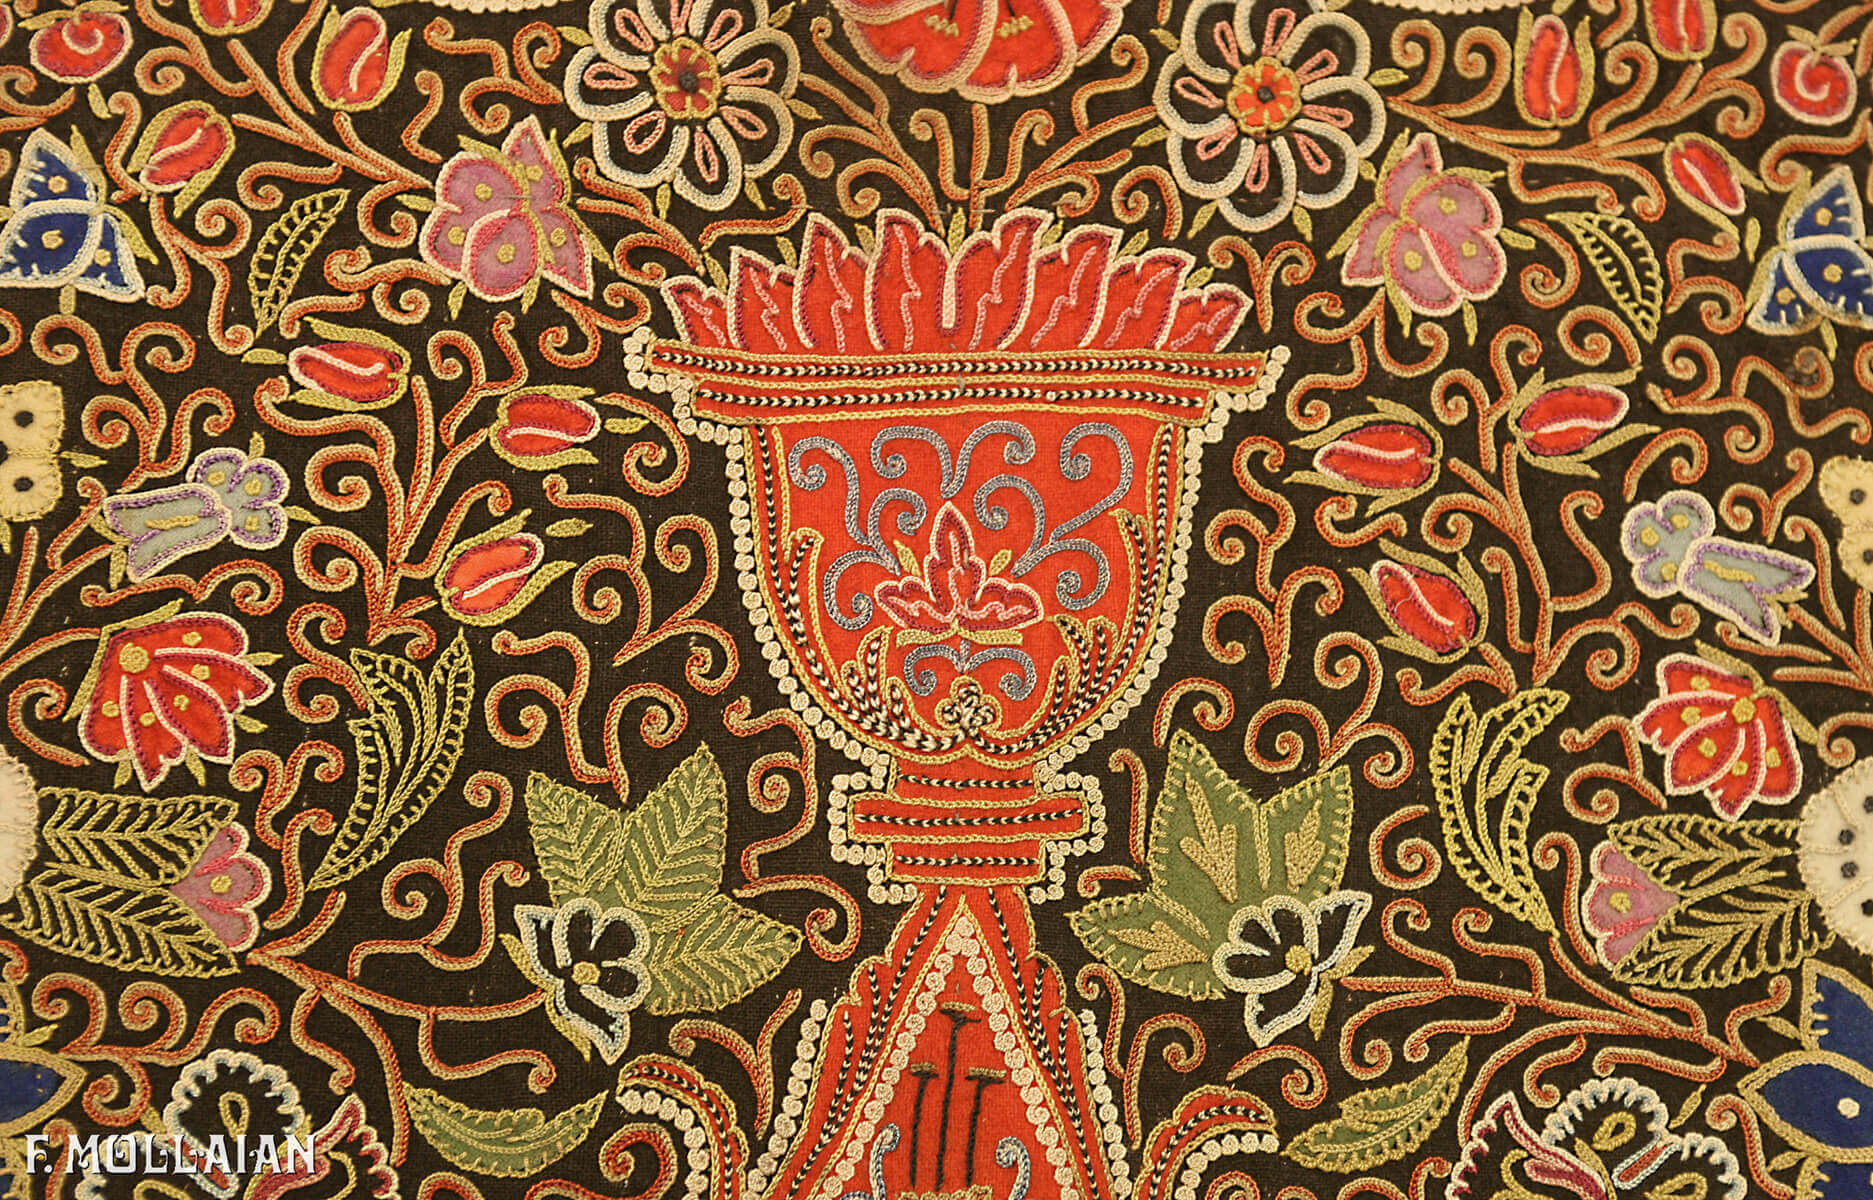 Textil Persischer Antiker Rashti-Duzi n°:30524741